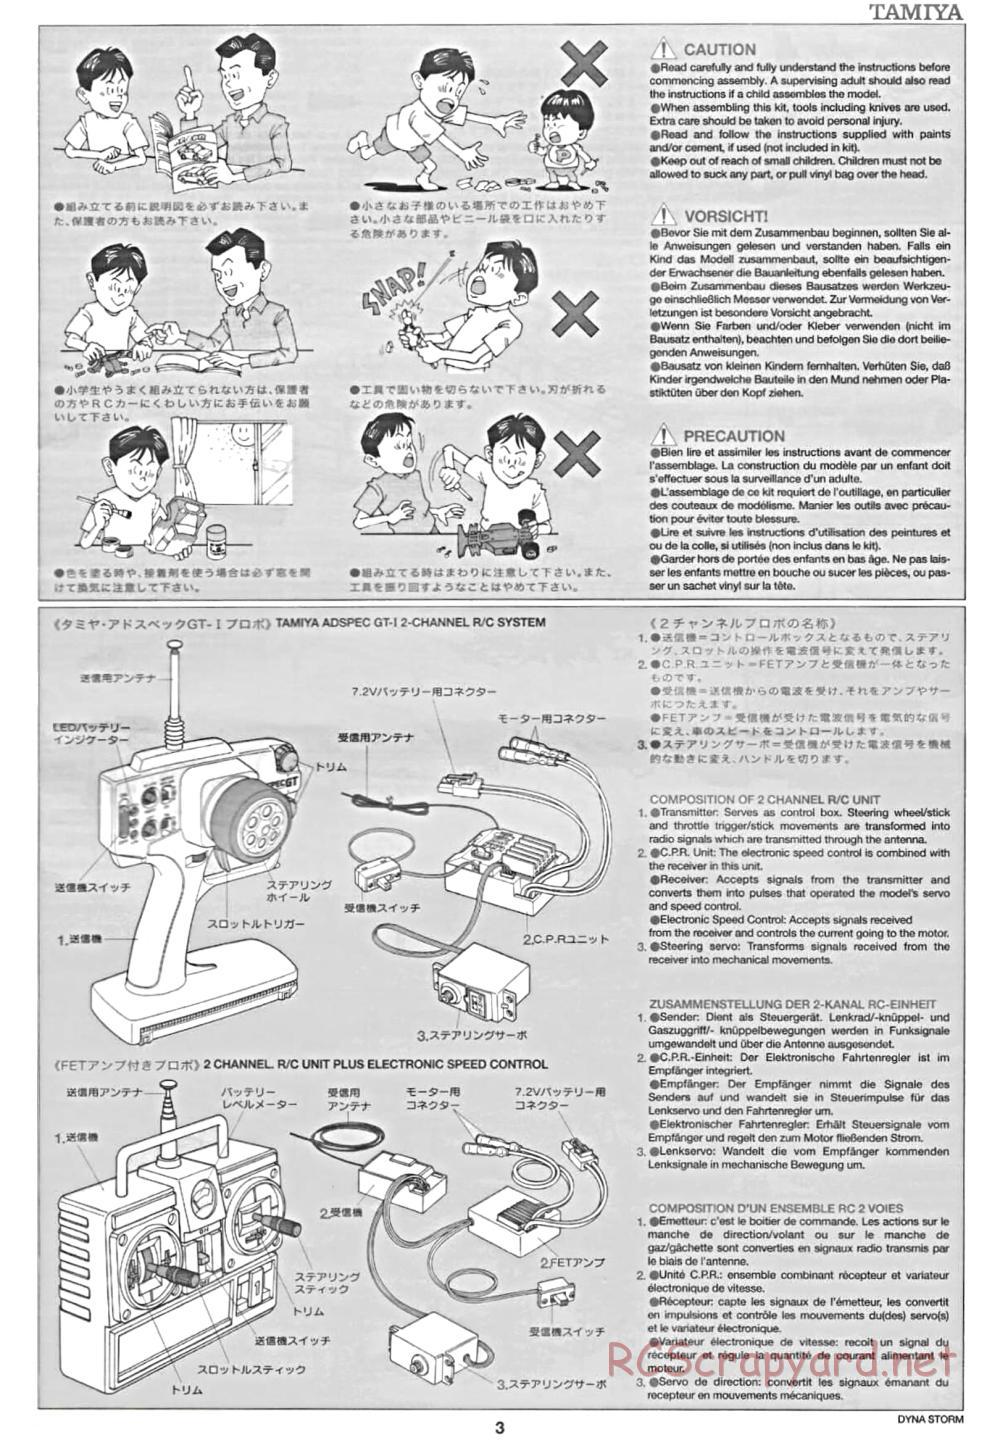 Tamiya - Dyna Storm Chassis - Manual - Page 3